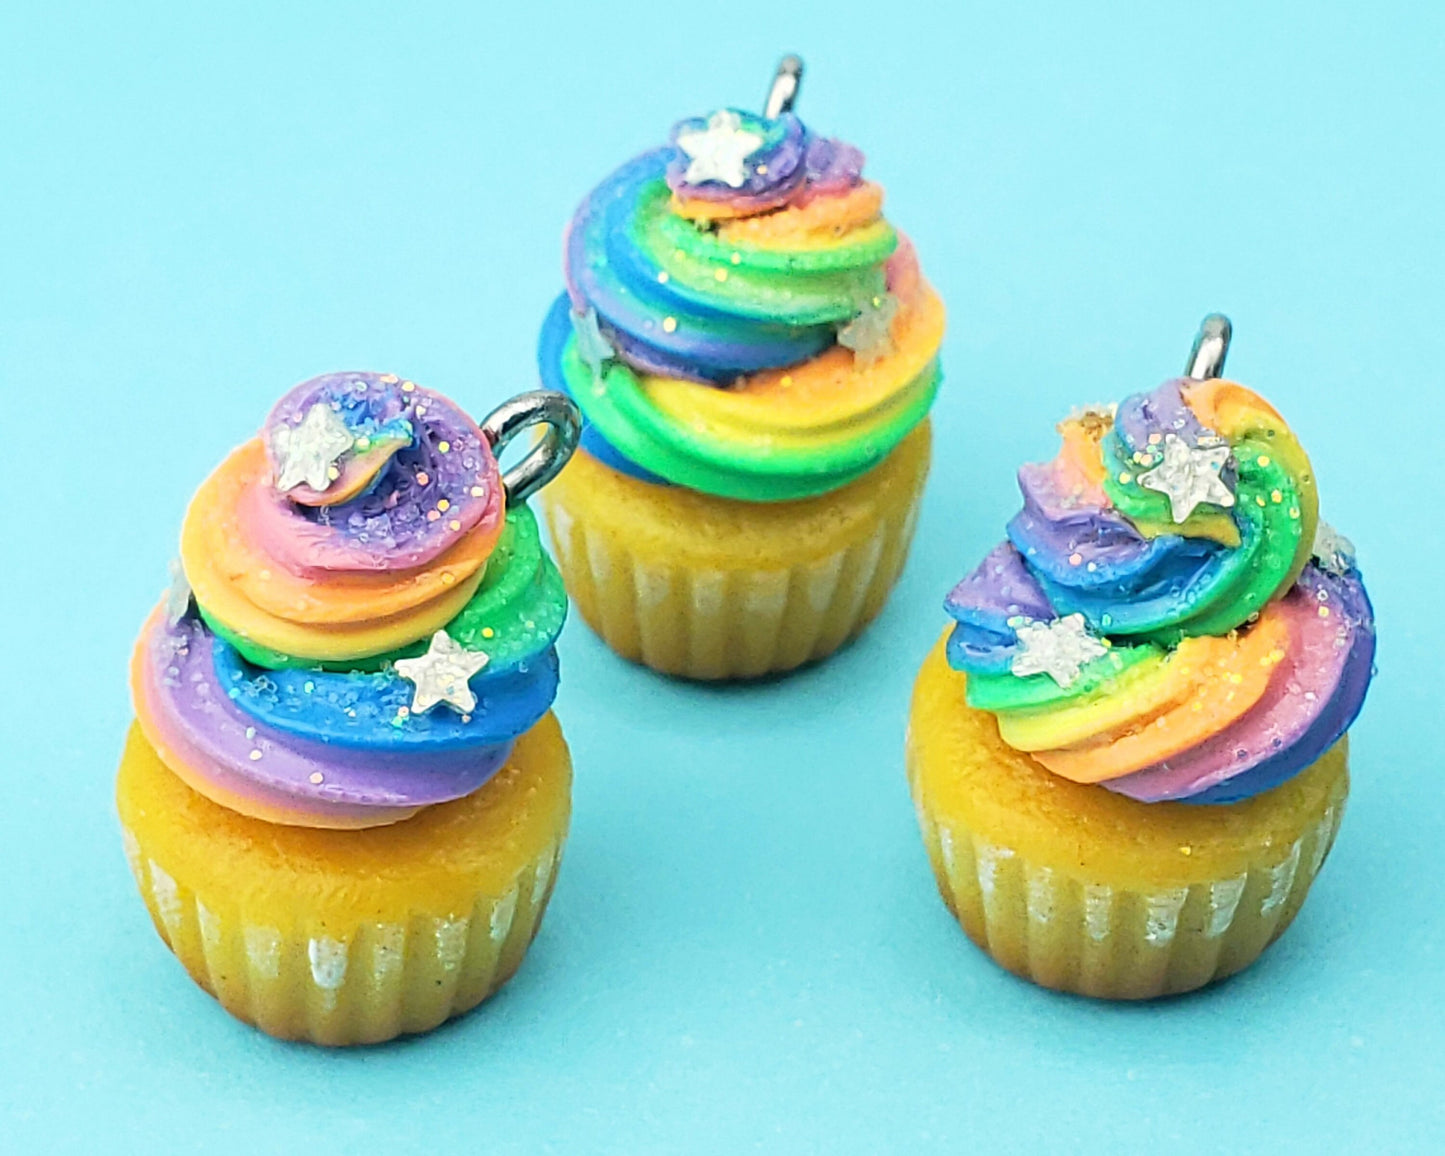 Rainbow Star Cupcake Earrings